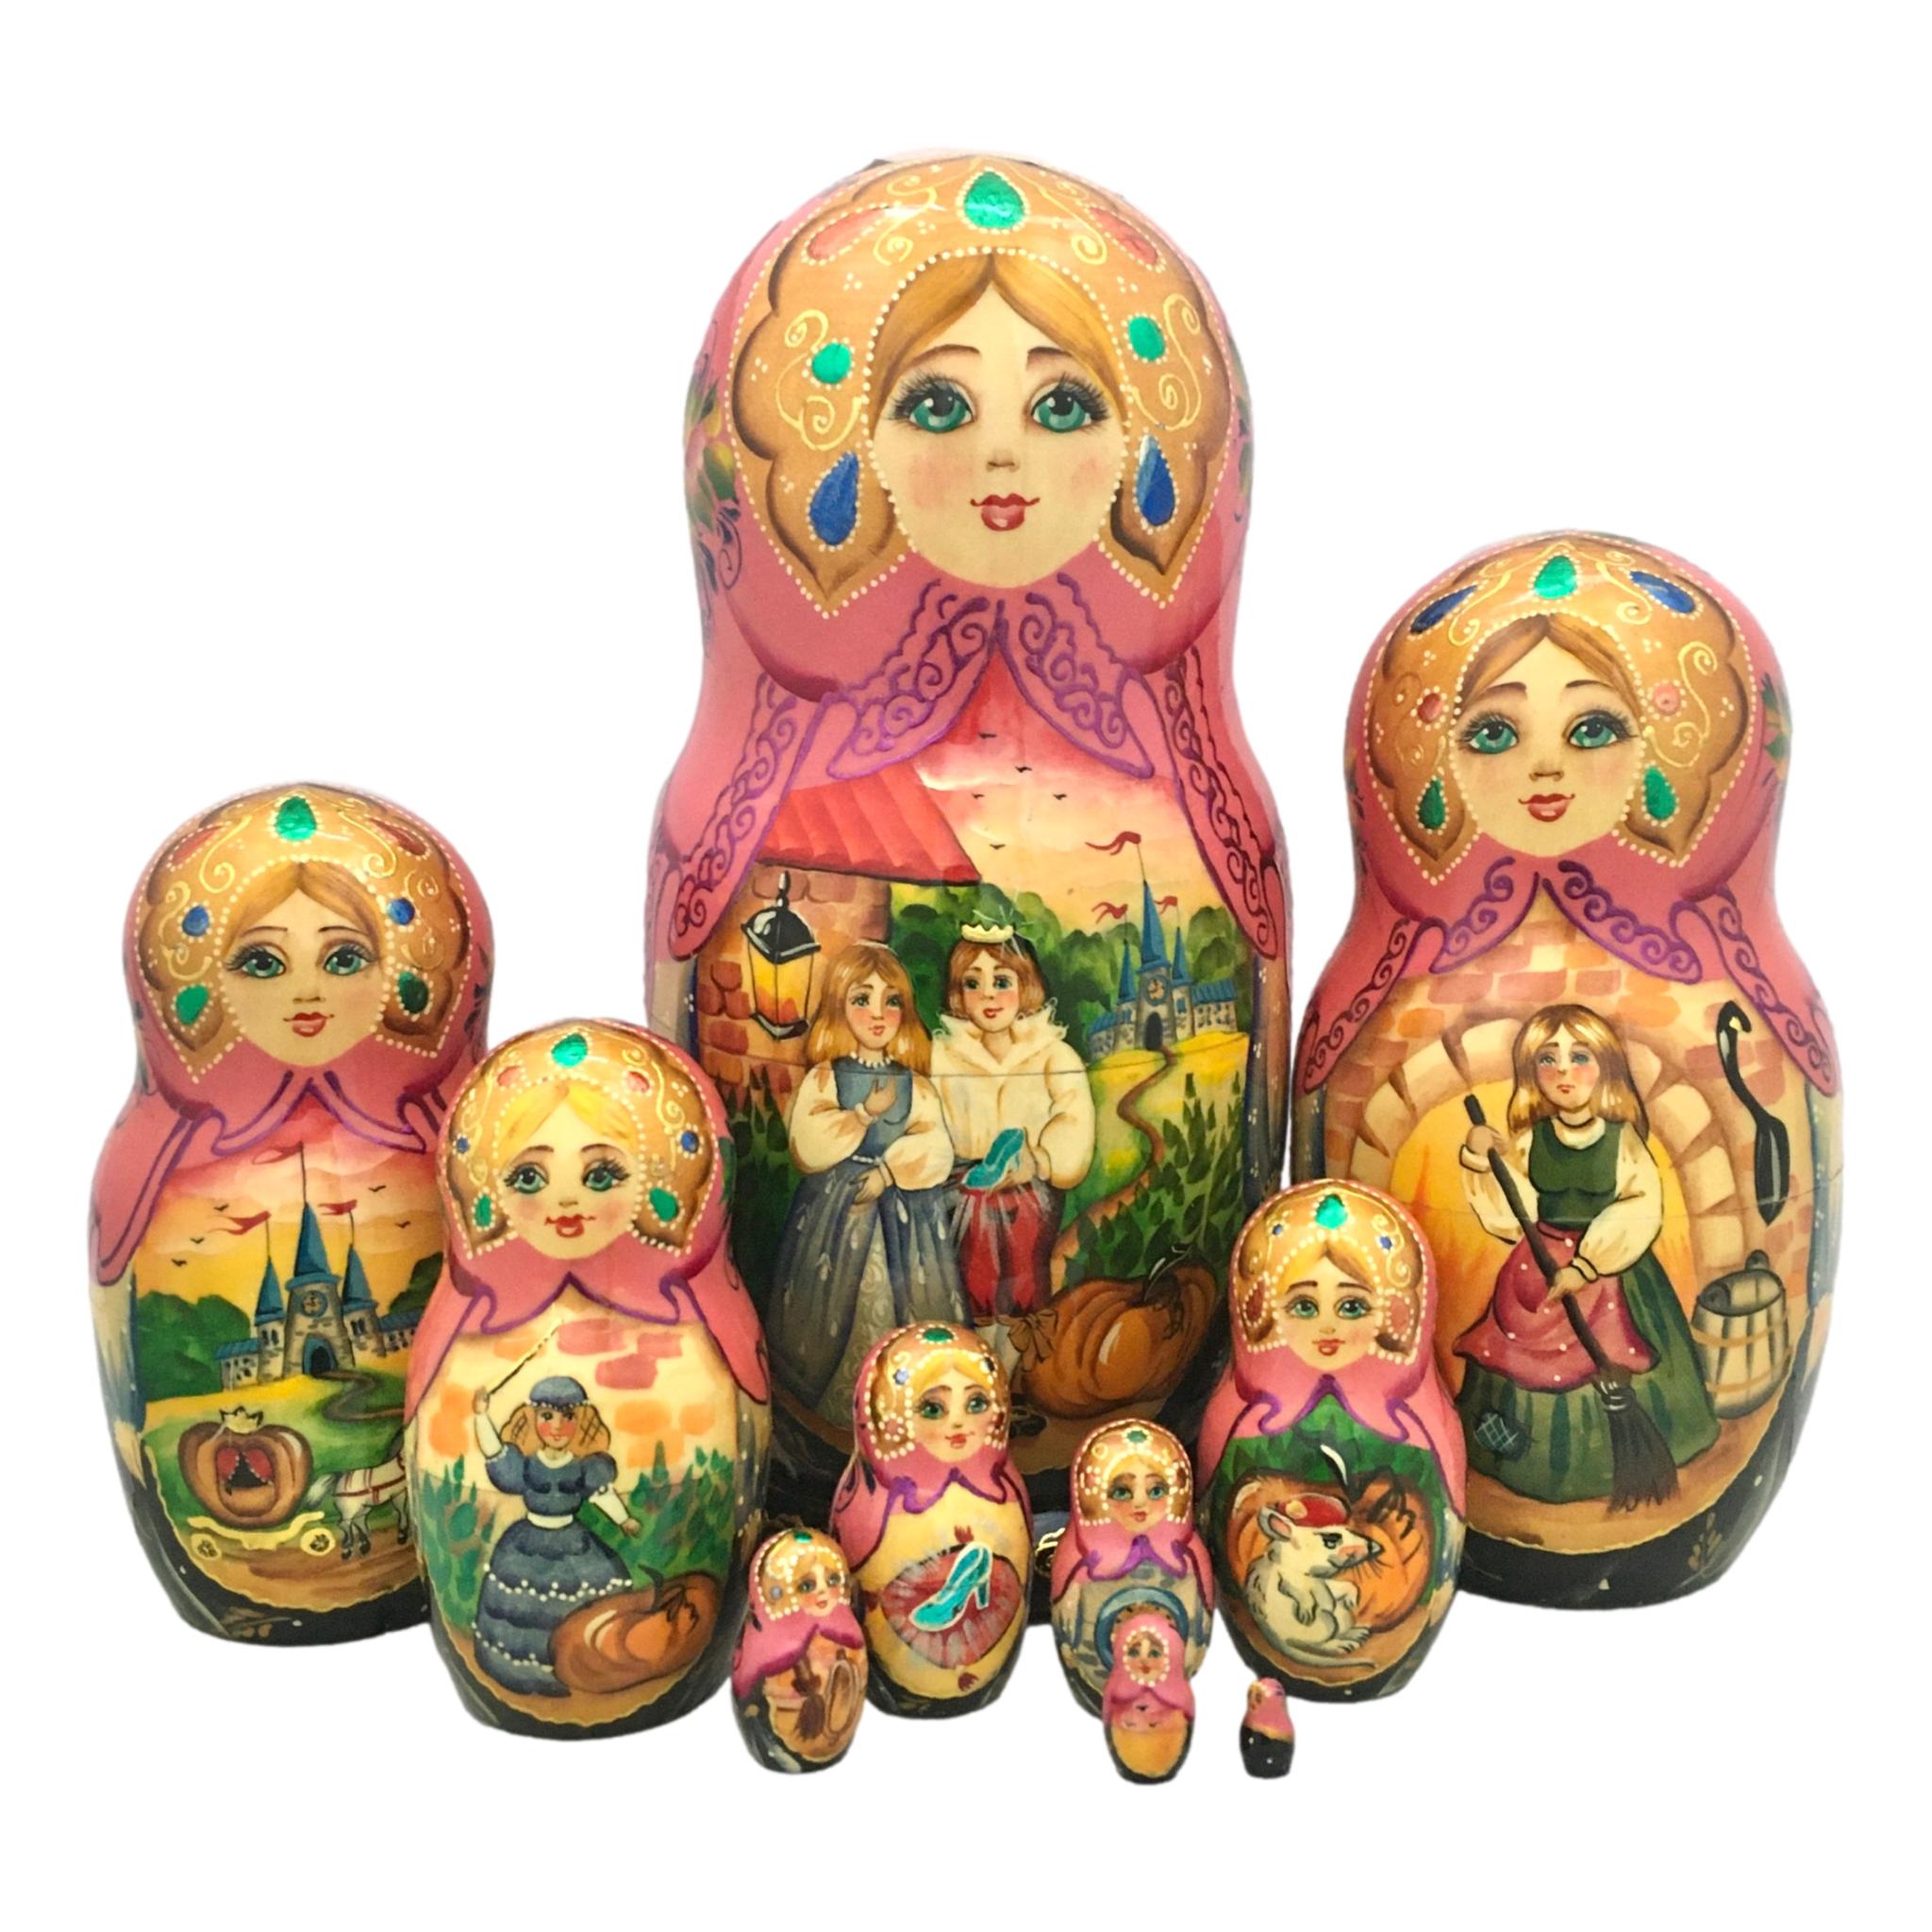 Cinderella 10 Piece Nesting Dolls Russian Fairytale Storyteller for Kids